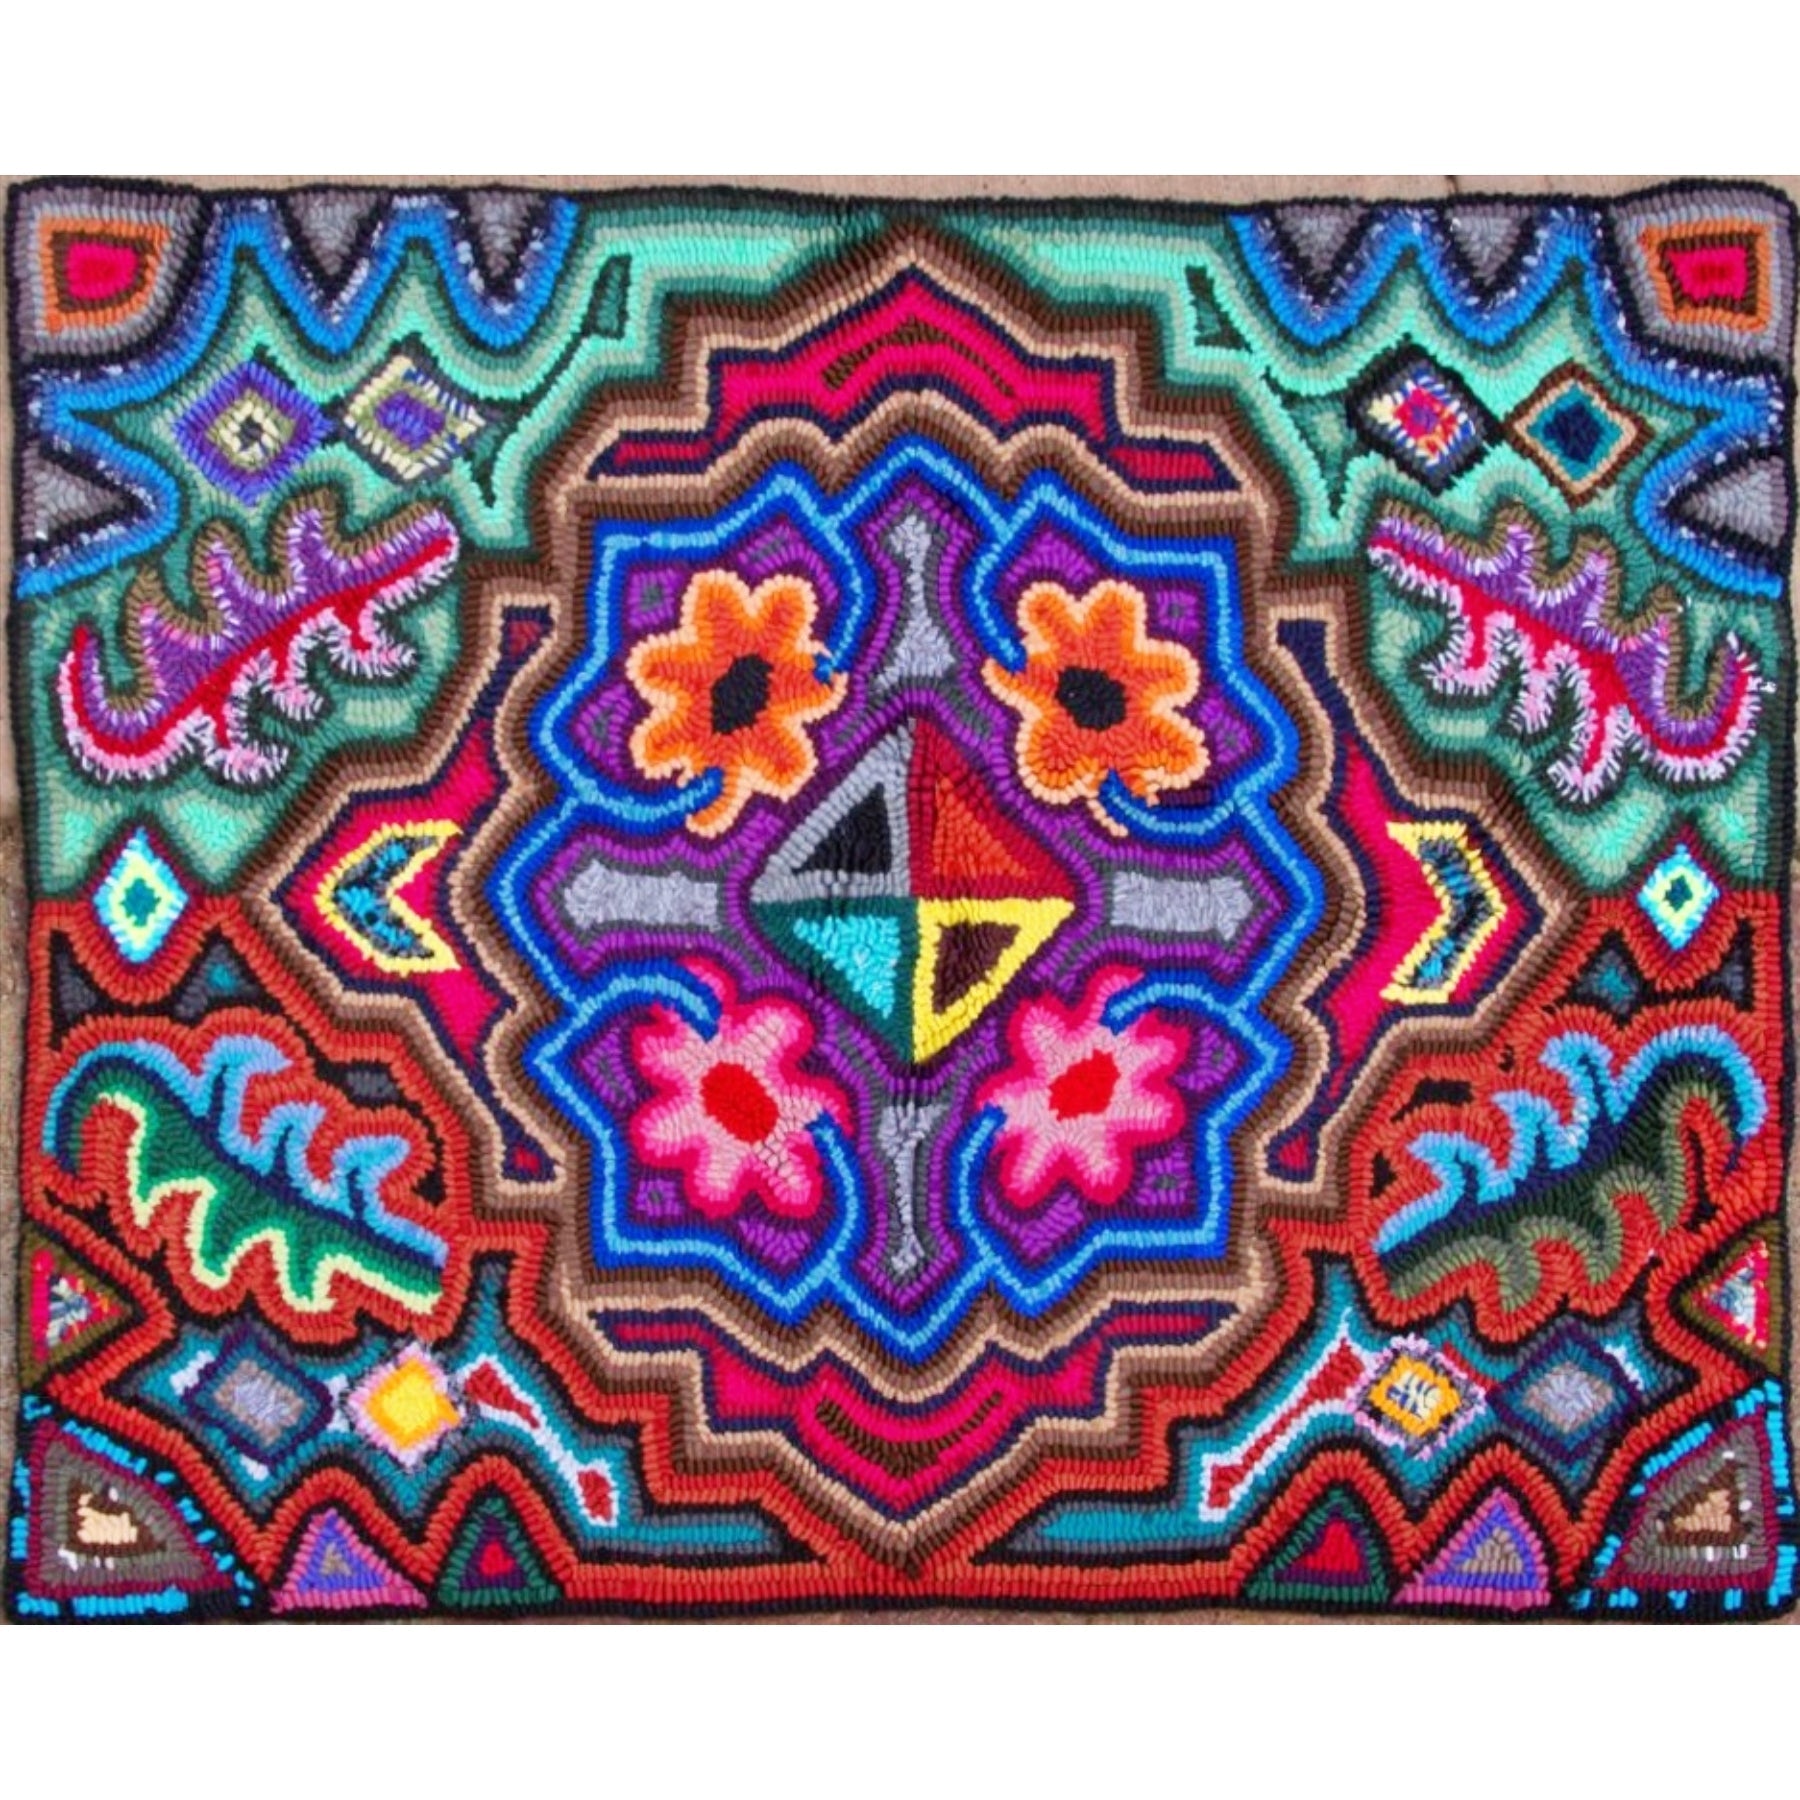 Multicolores Pattern #3, rug hooked by Micaela Churunel Aju